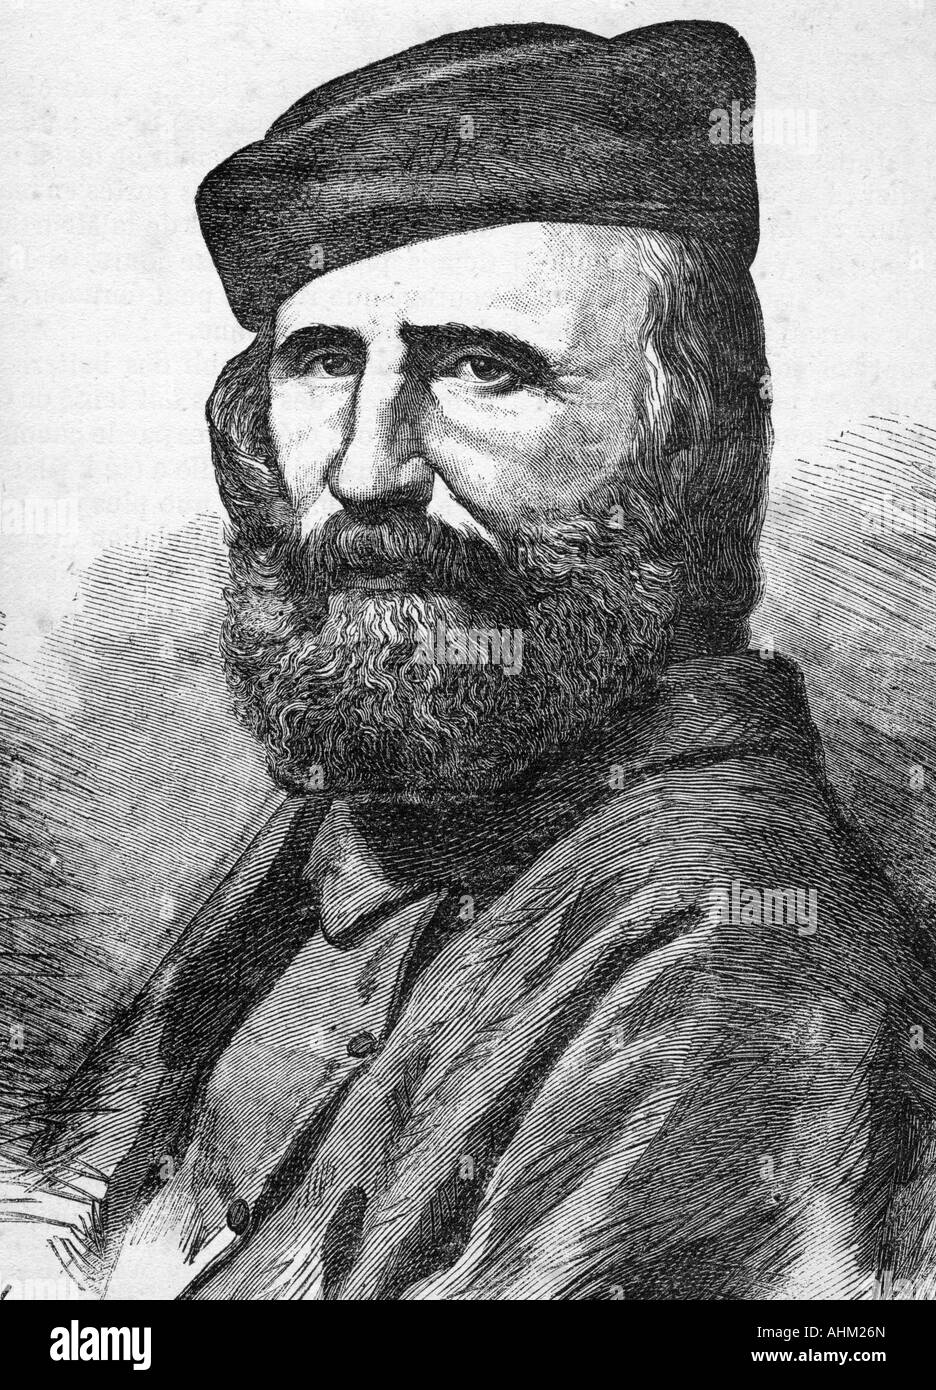 Garibaldi, Giuseppe, 4.7.1807 - 2.6.1882, Italian freedom fighter, portrait, engraving, 19th century, Stock Photo